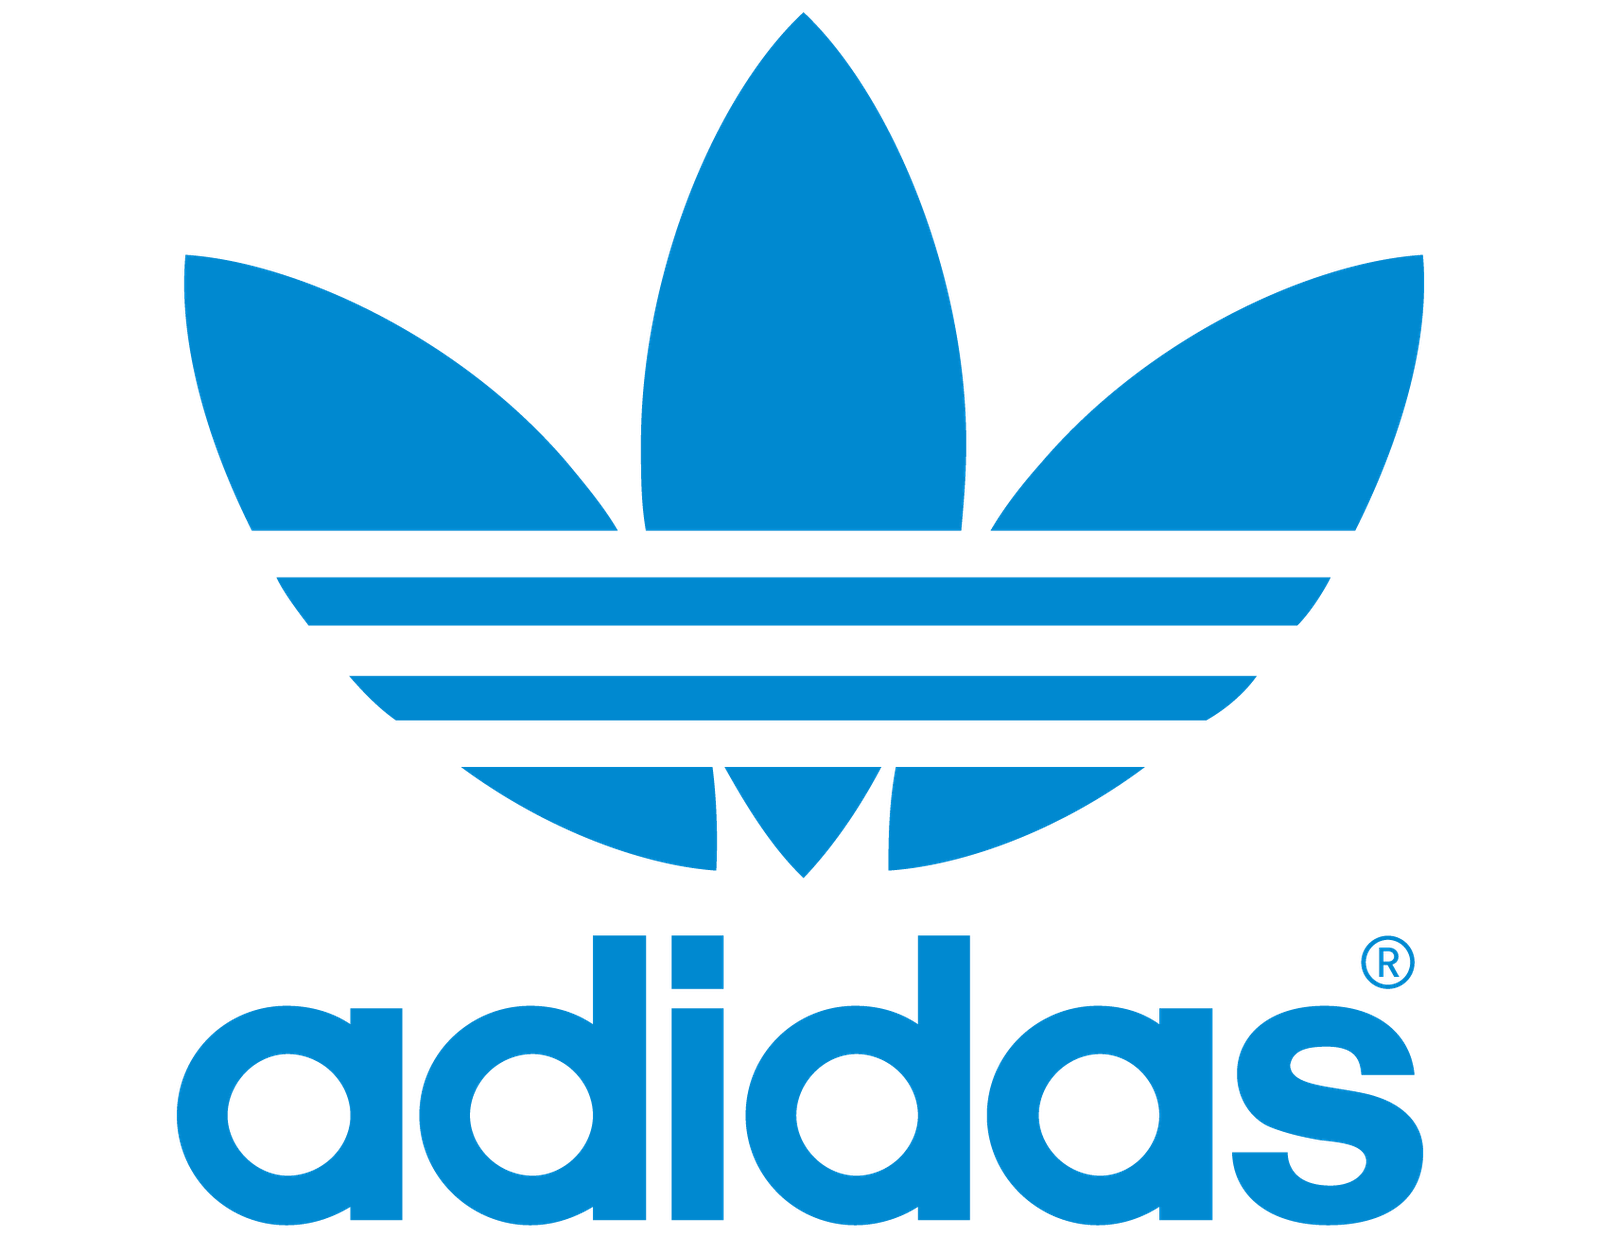 Adidas Picture Logos - adidas logo taringa roblox